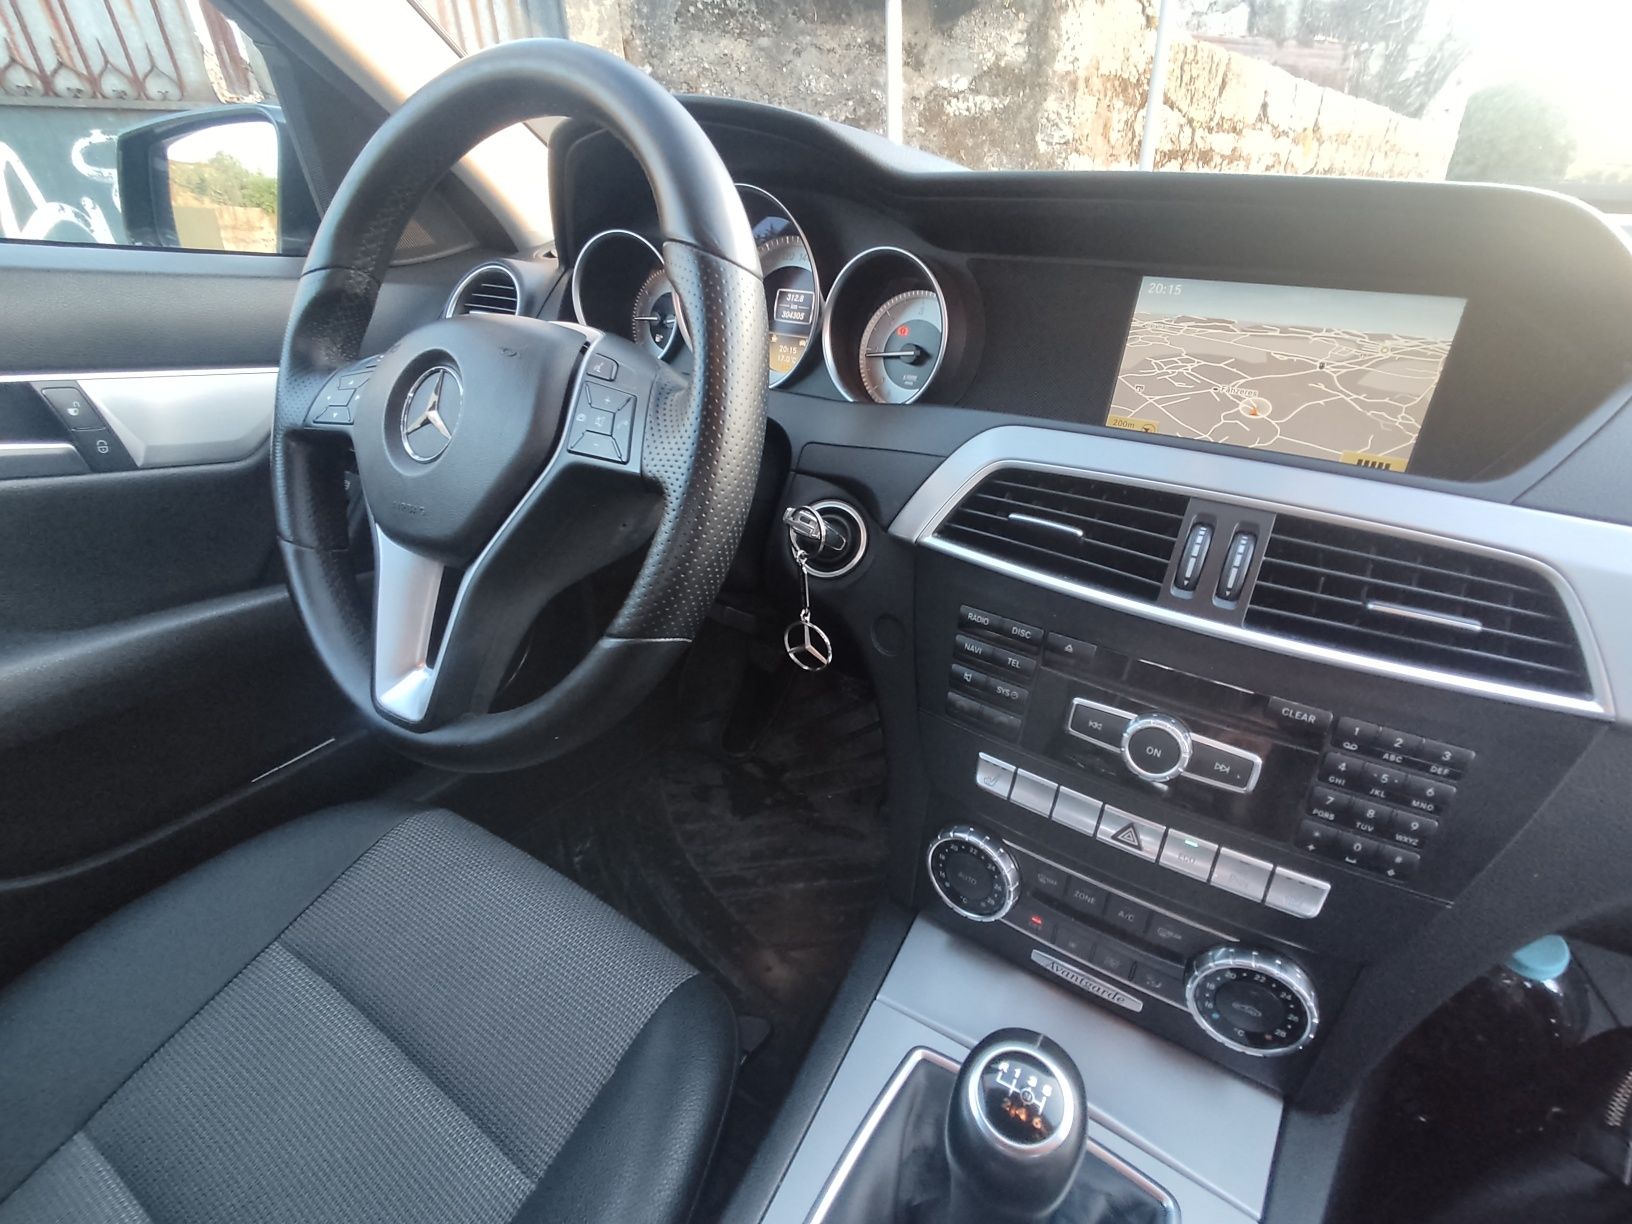 Mercedes C220 CDI Facelift